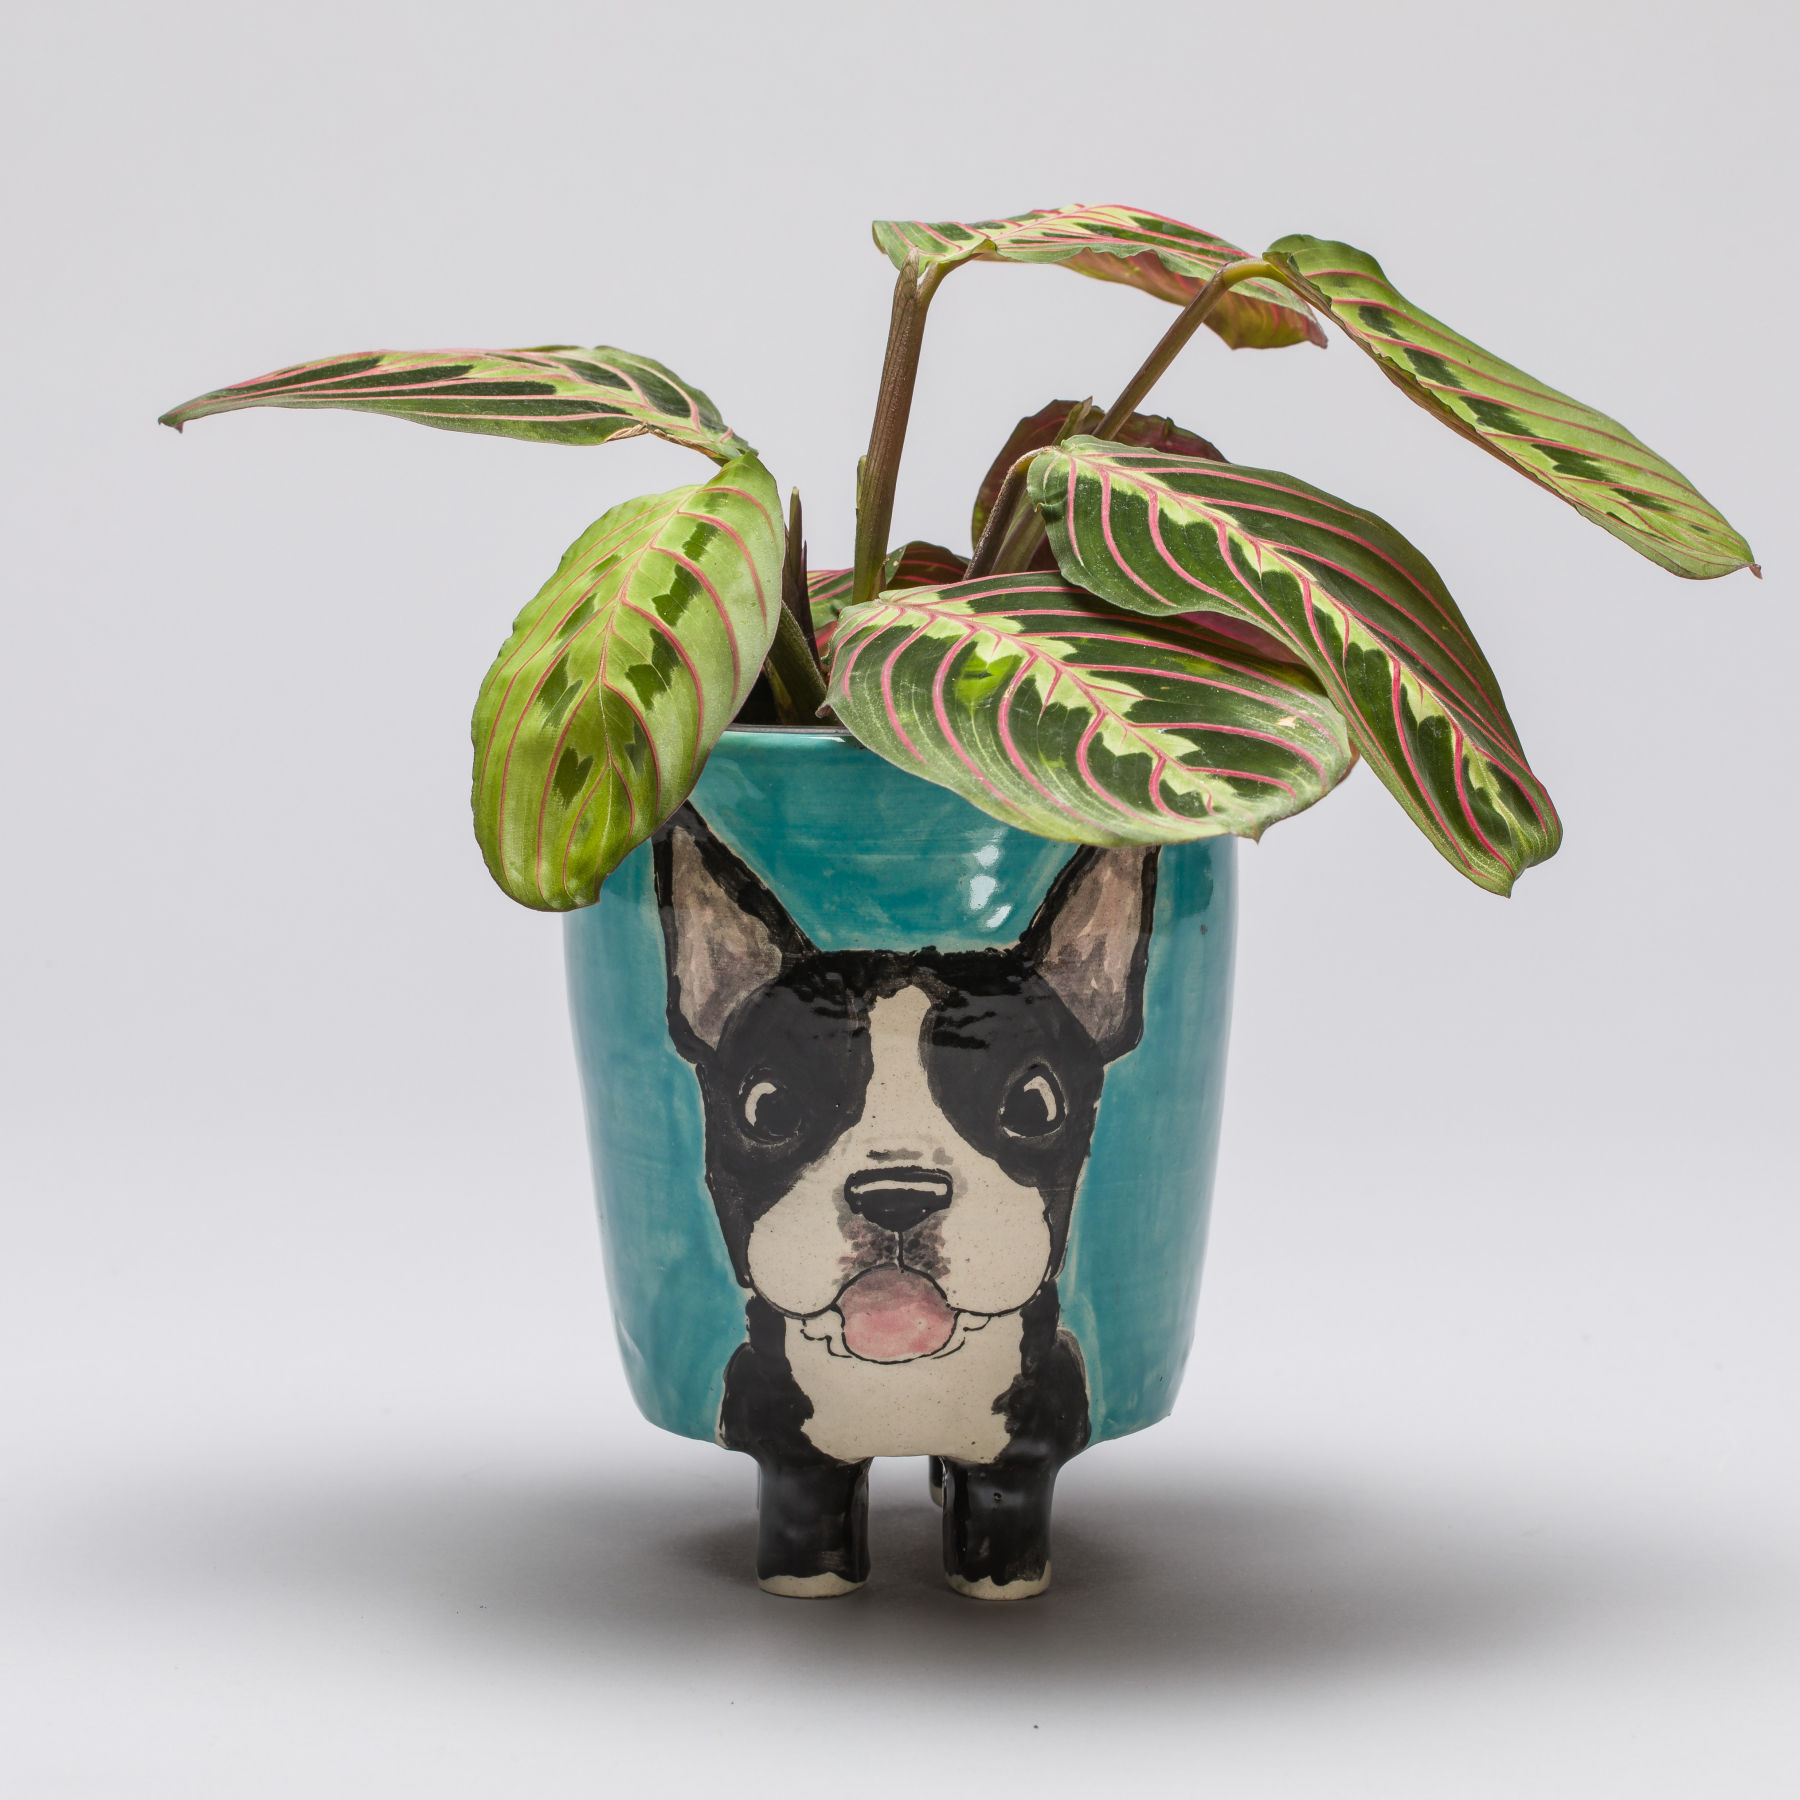 Portrait on Flower Pot with Live Prayer Plant - $89